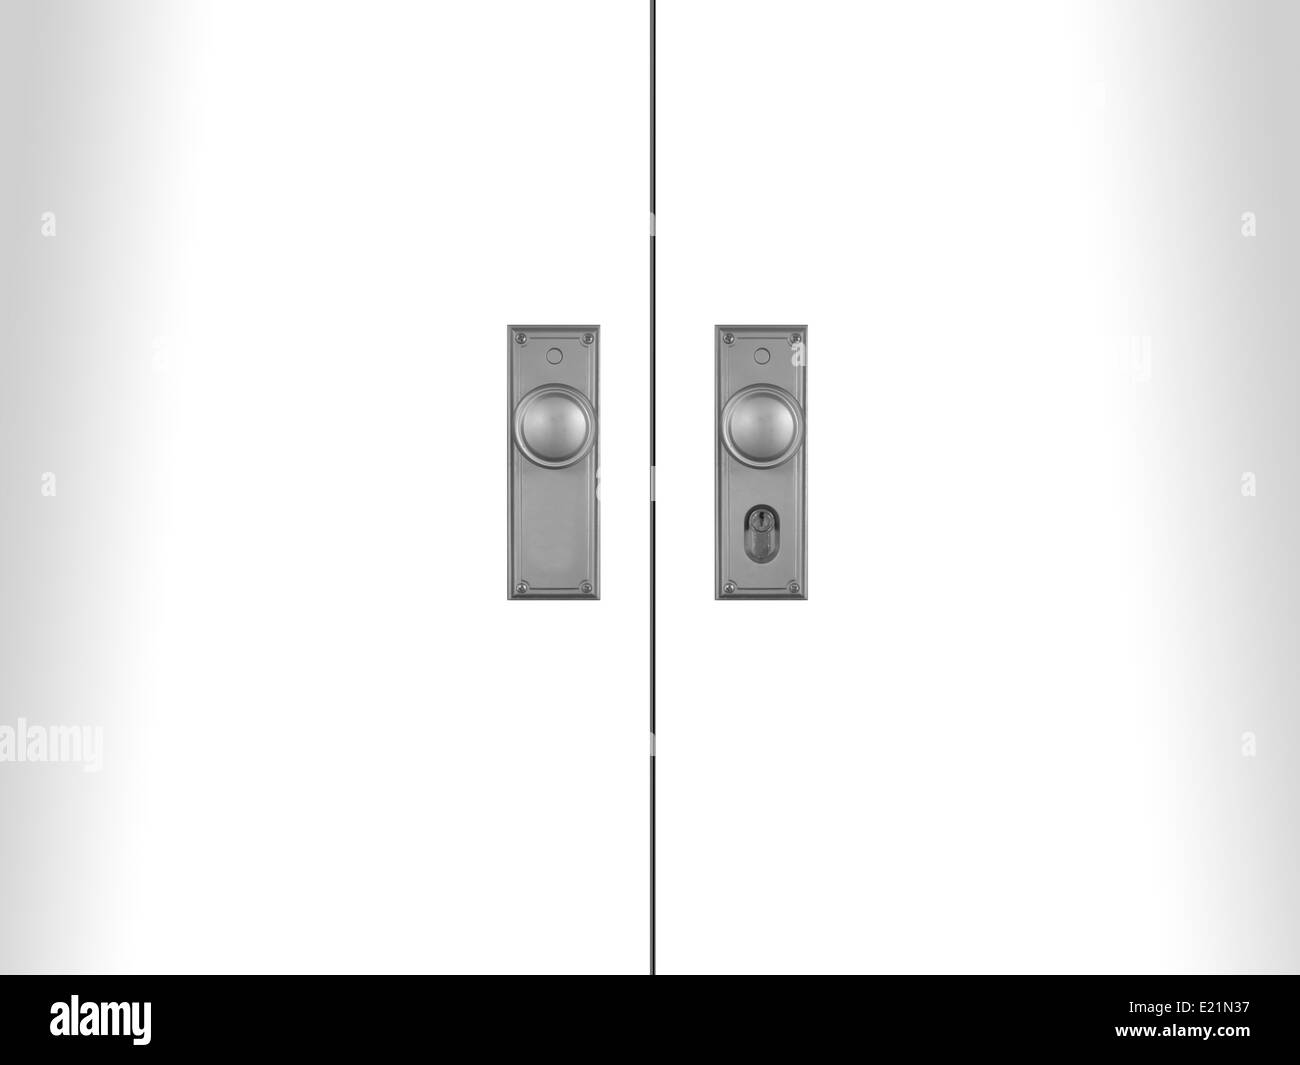 Doors and door handles isolated on white Stock Photo